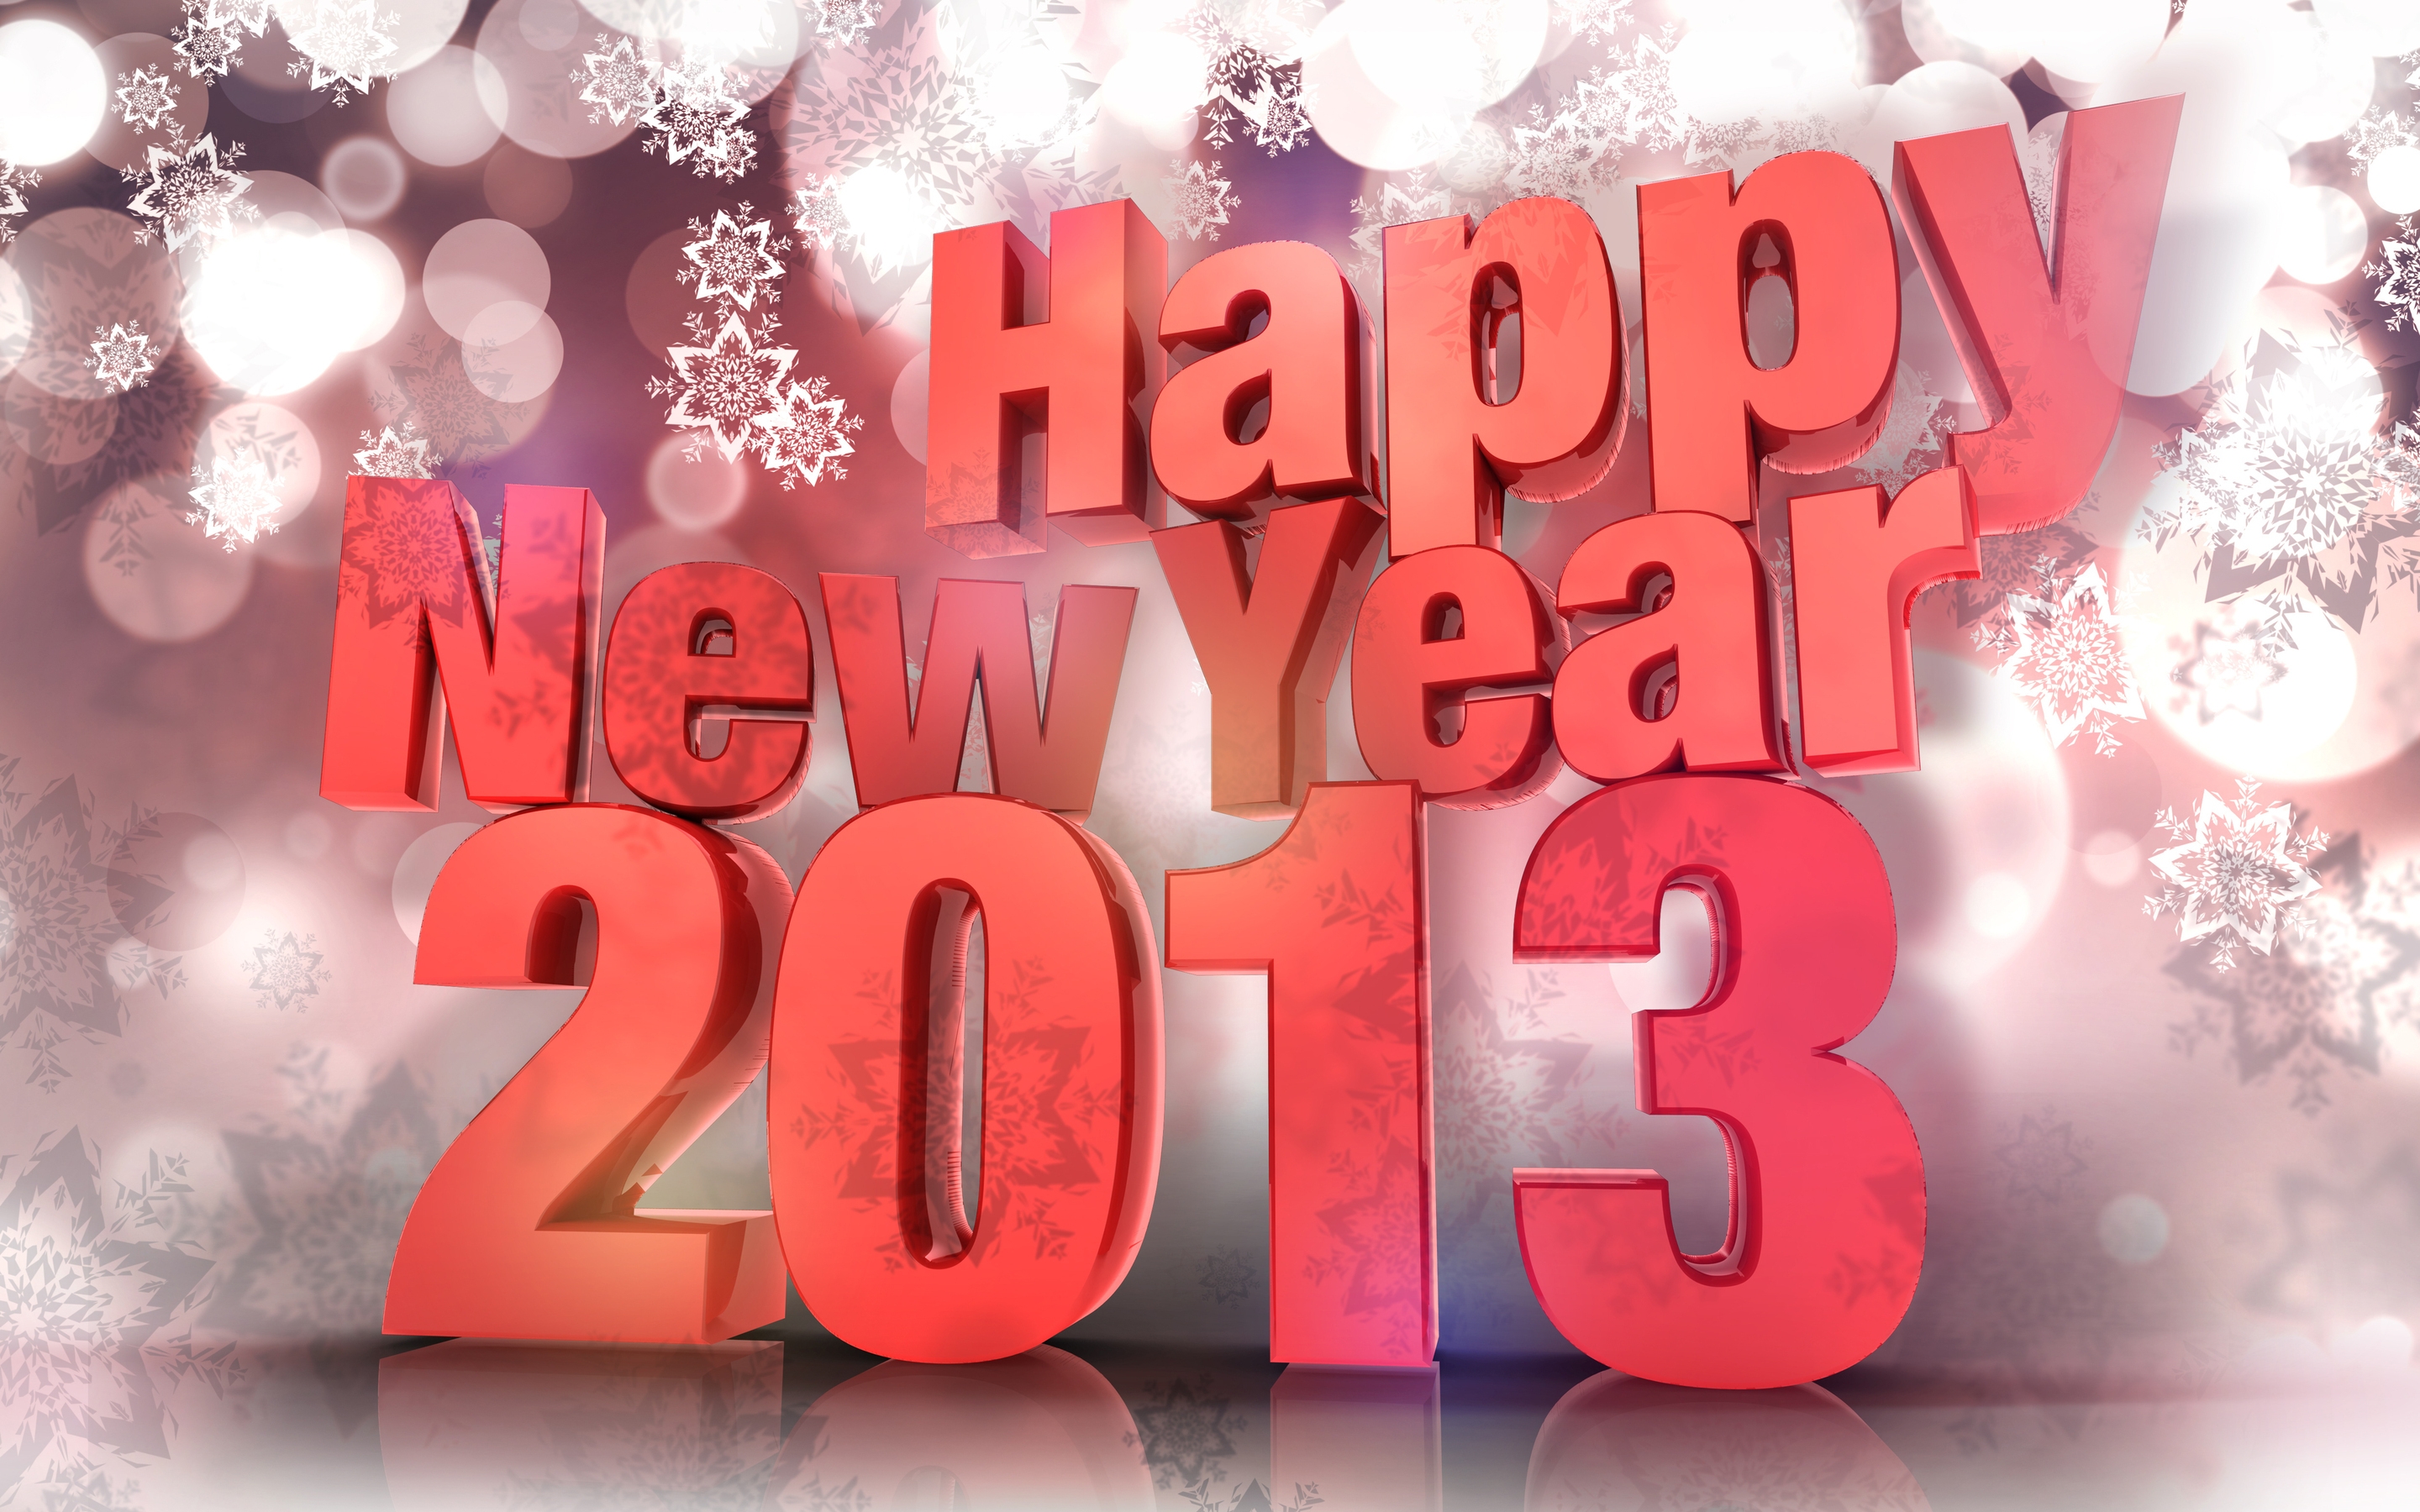 Happy New 2013 for 2880 x 1800 Retina Display resolution